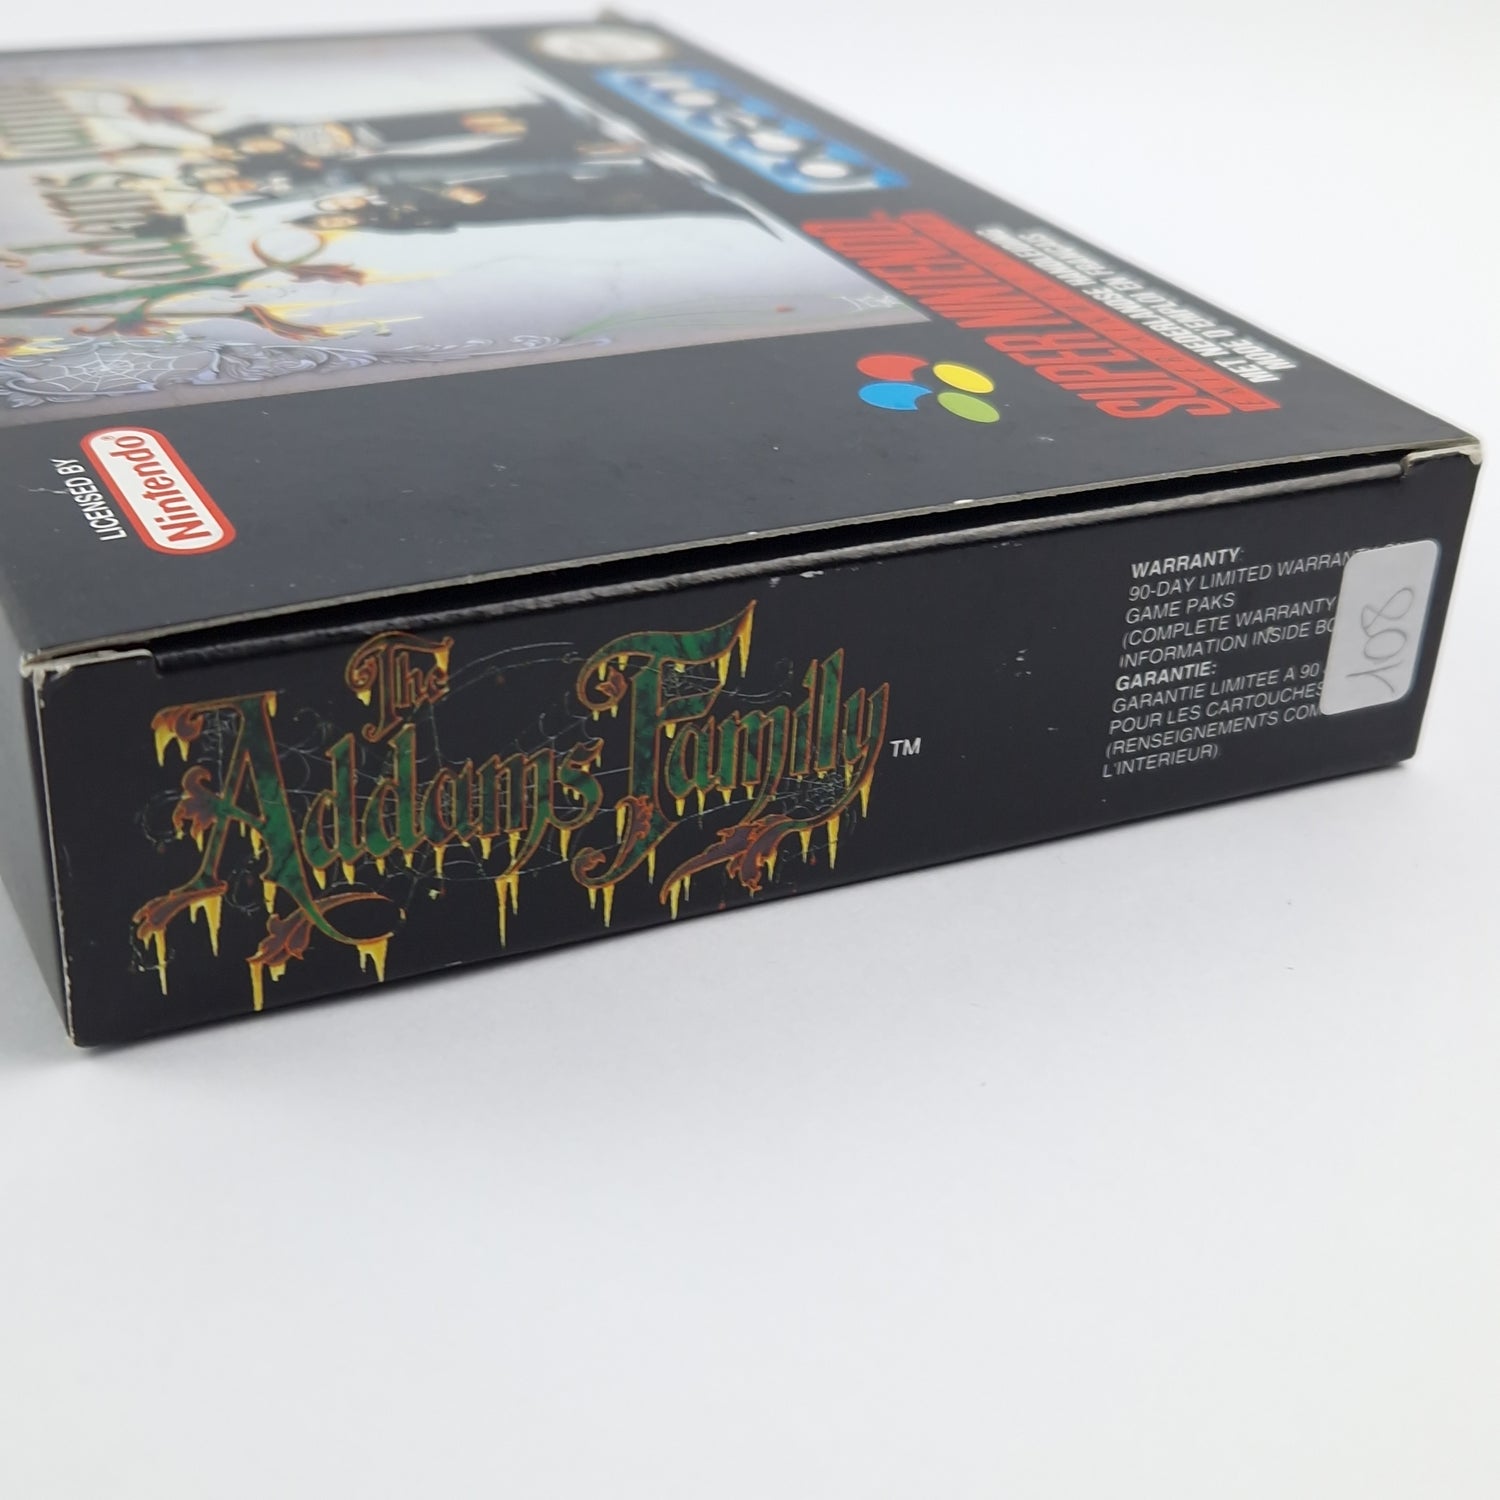 Super Nintendo Game: The Addams Family - Module Instructions OVP cib SNES PAL